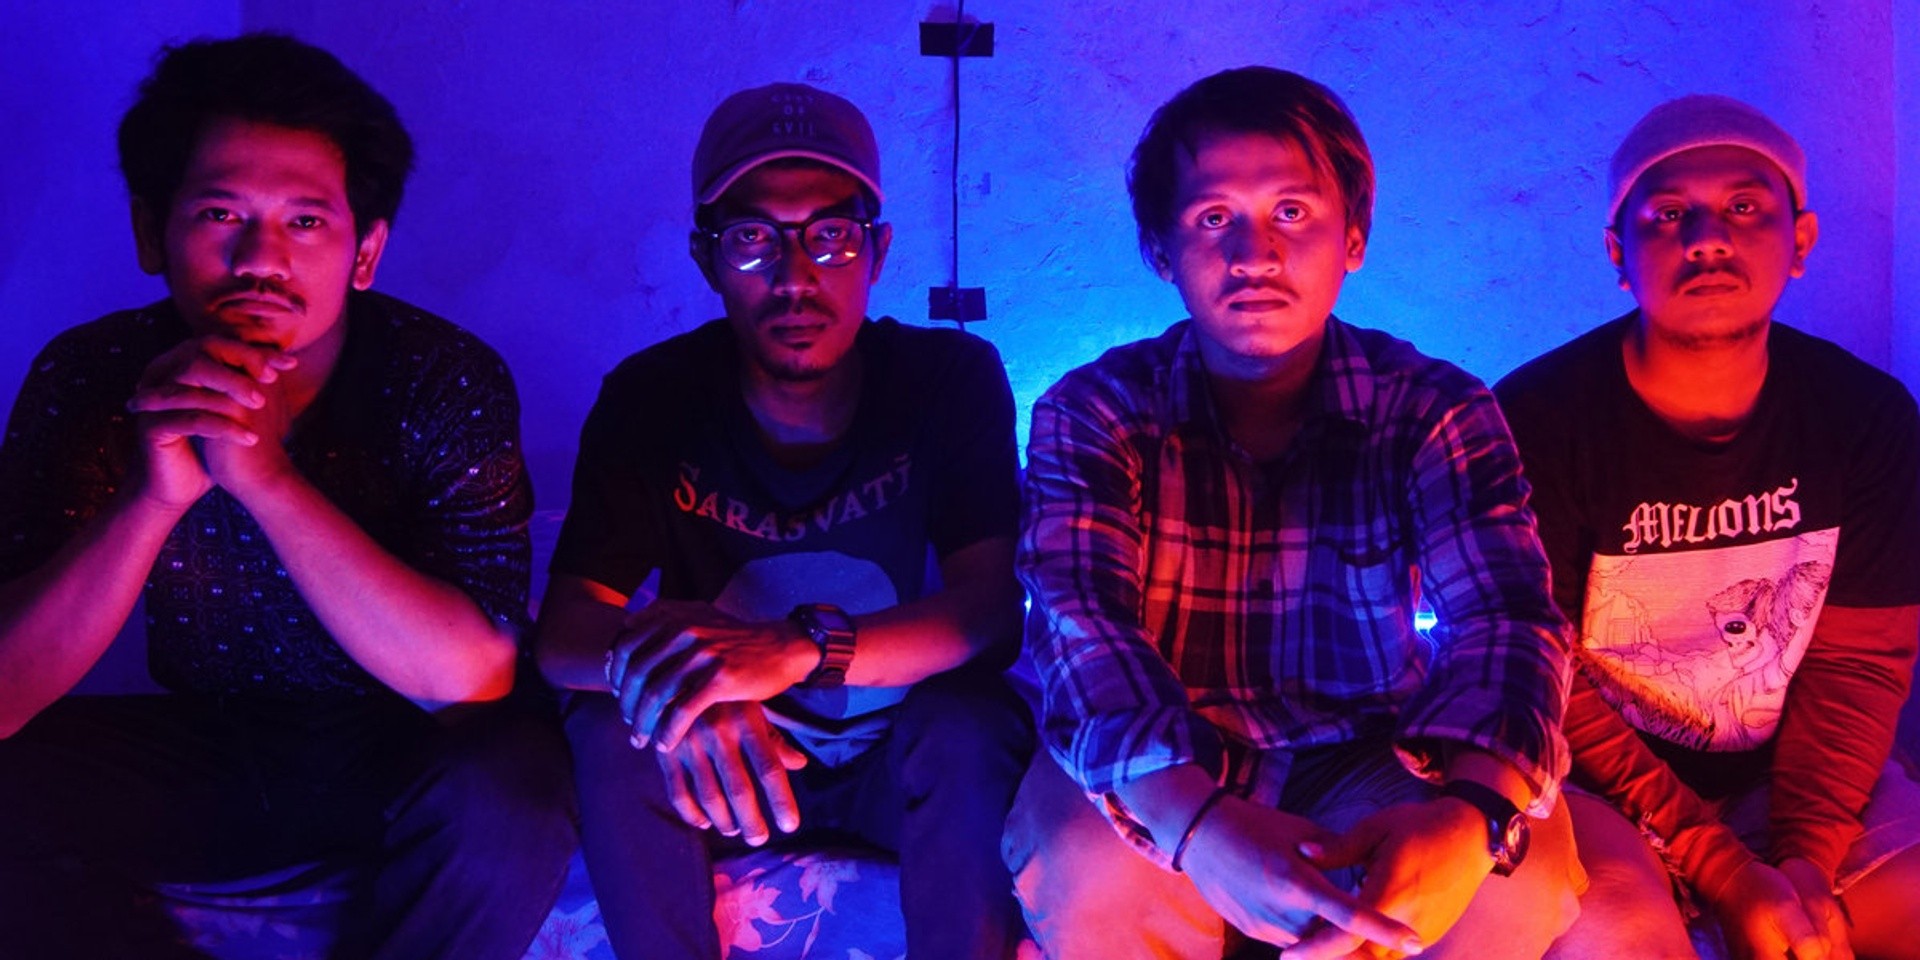 Indonesian shoegaze band Rissau announces Southeast Asia tour – Singapore, Kuala Lumpur, Batam and more confirmed